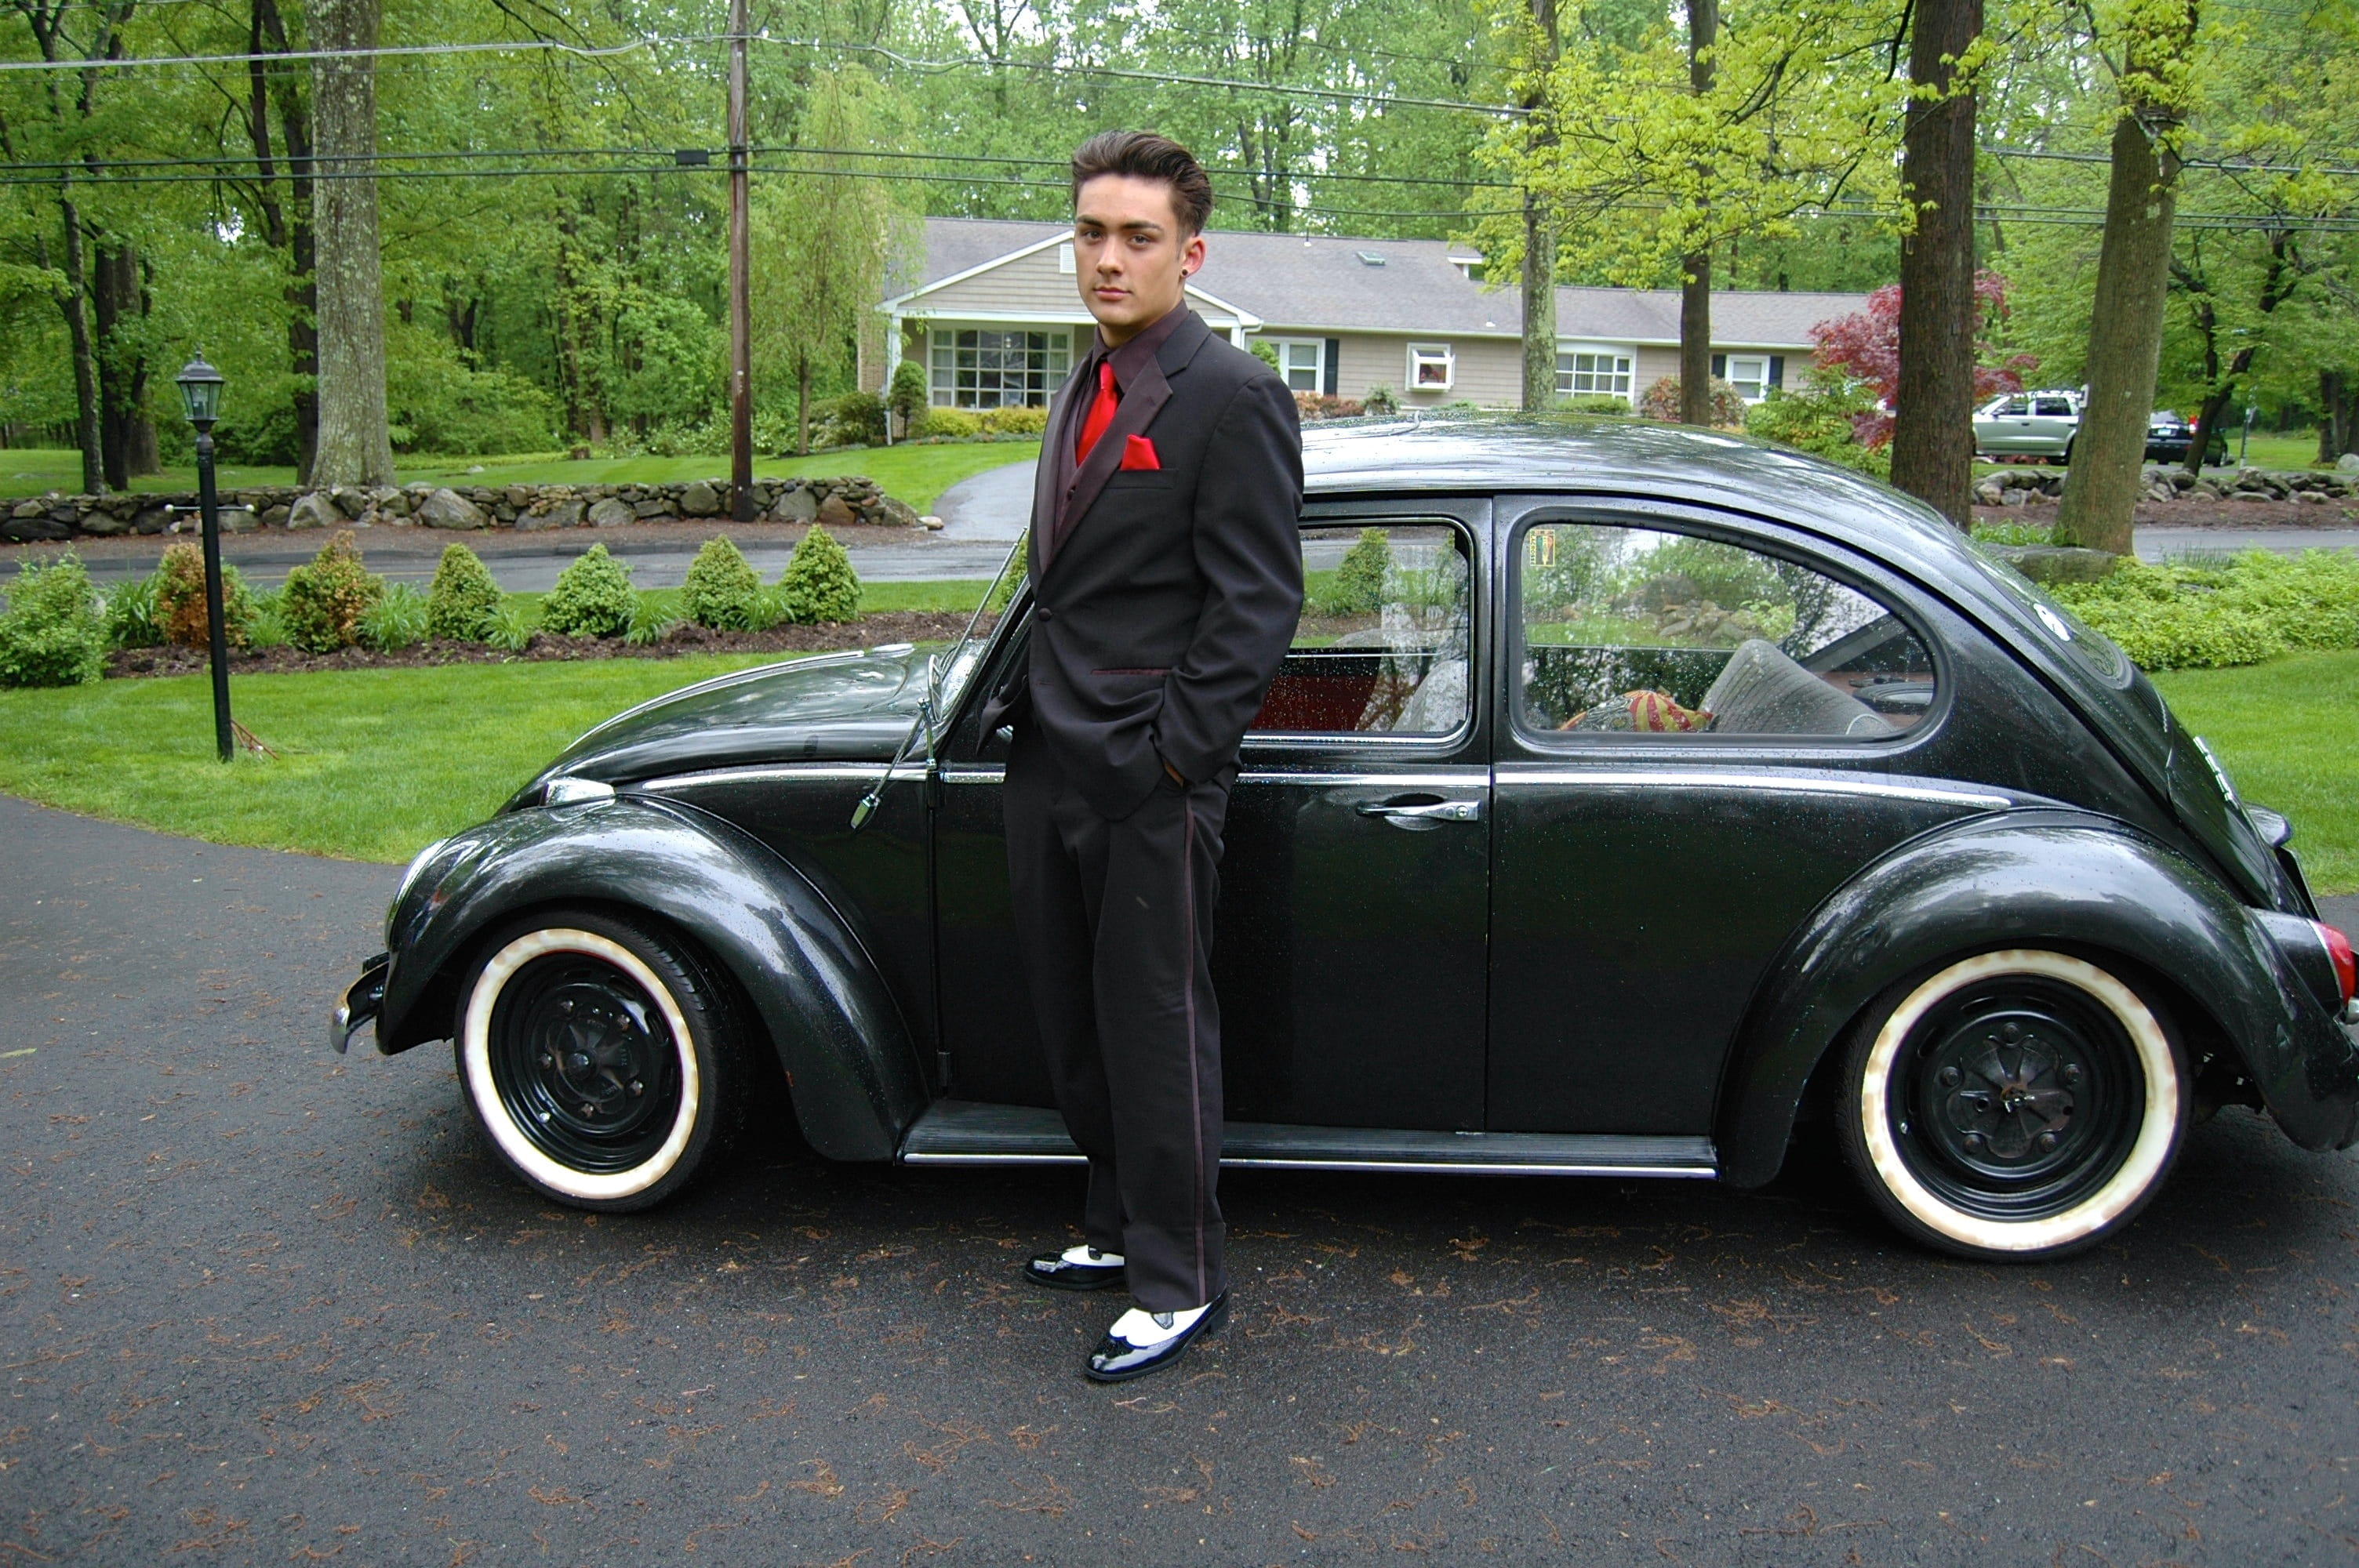 vw bug, 1966 vw beetle, classic car, male, young man, dapper